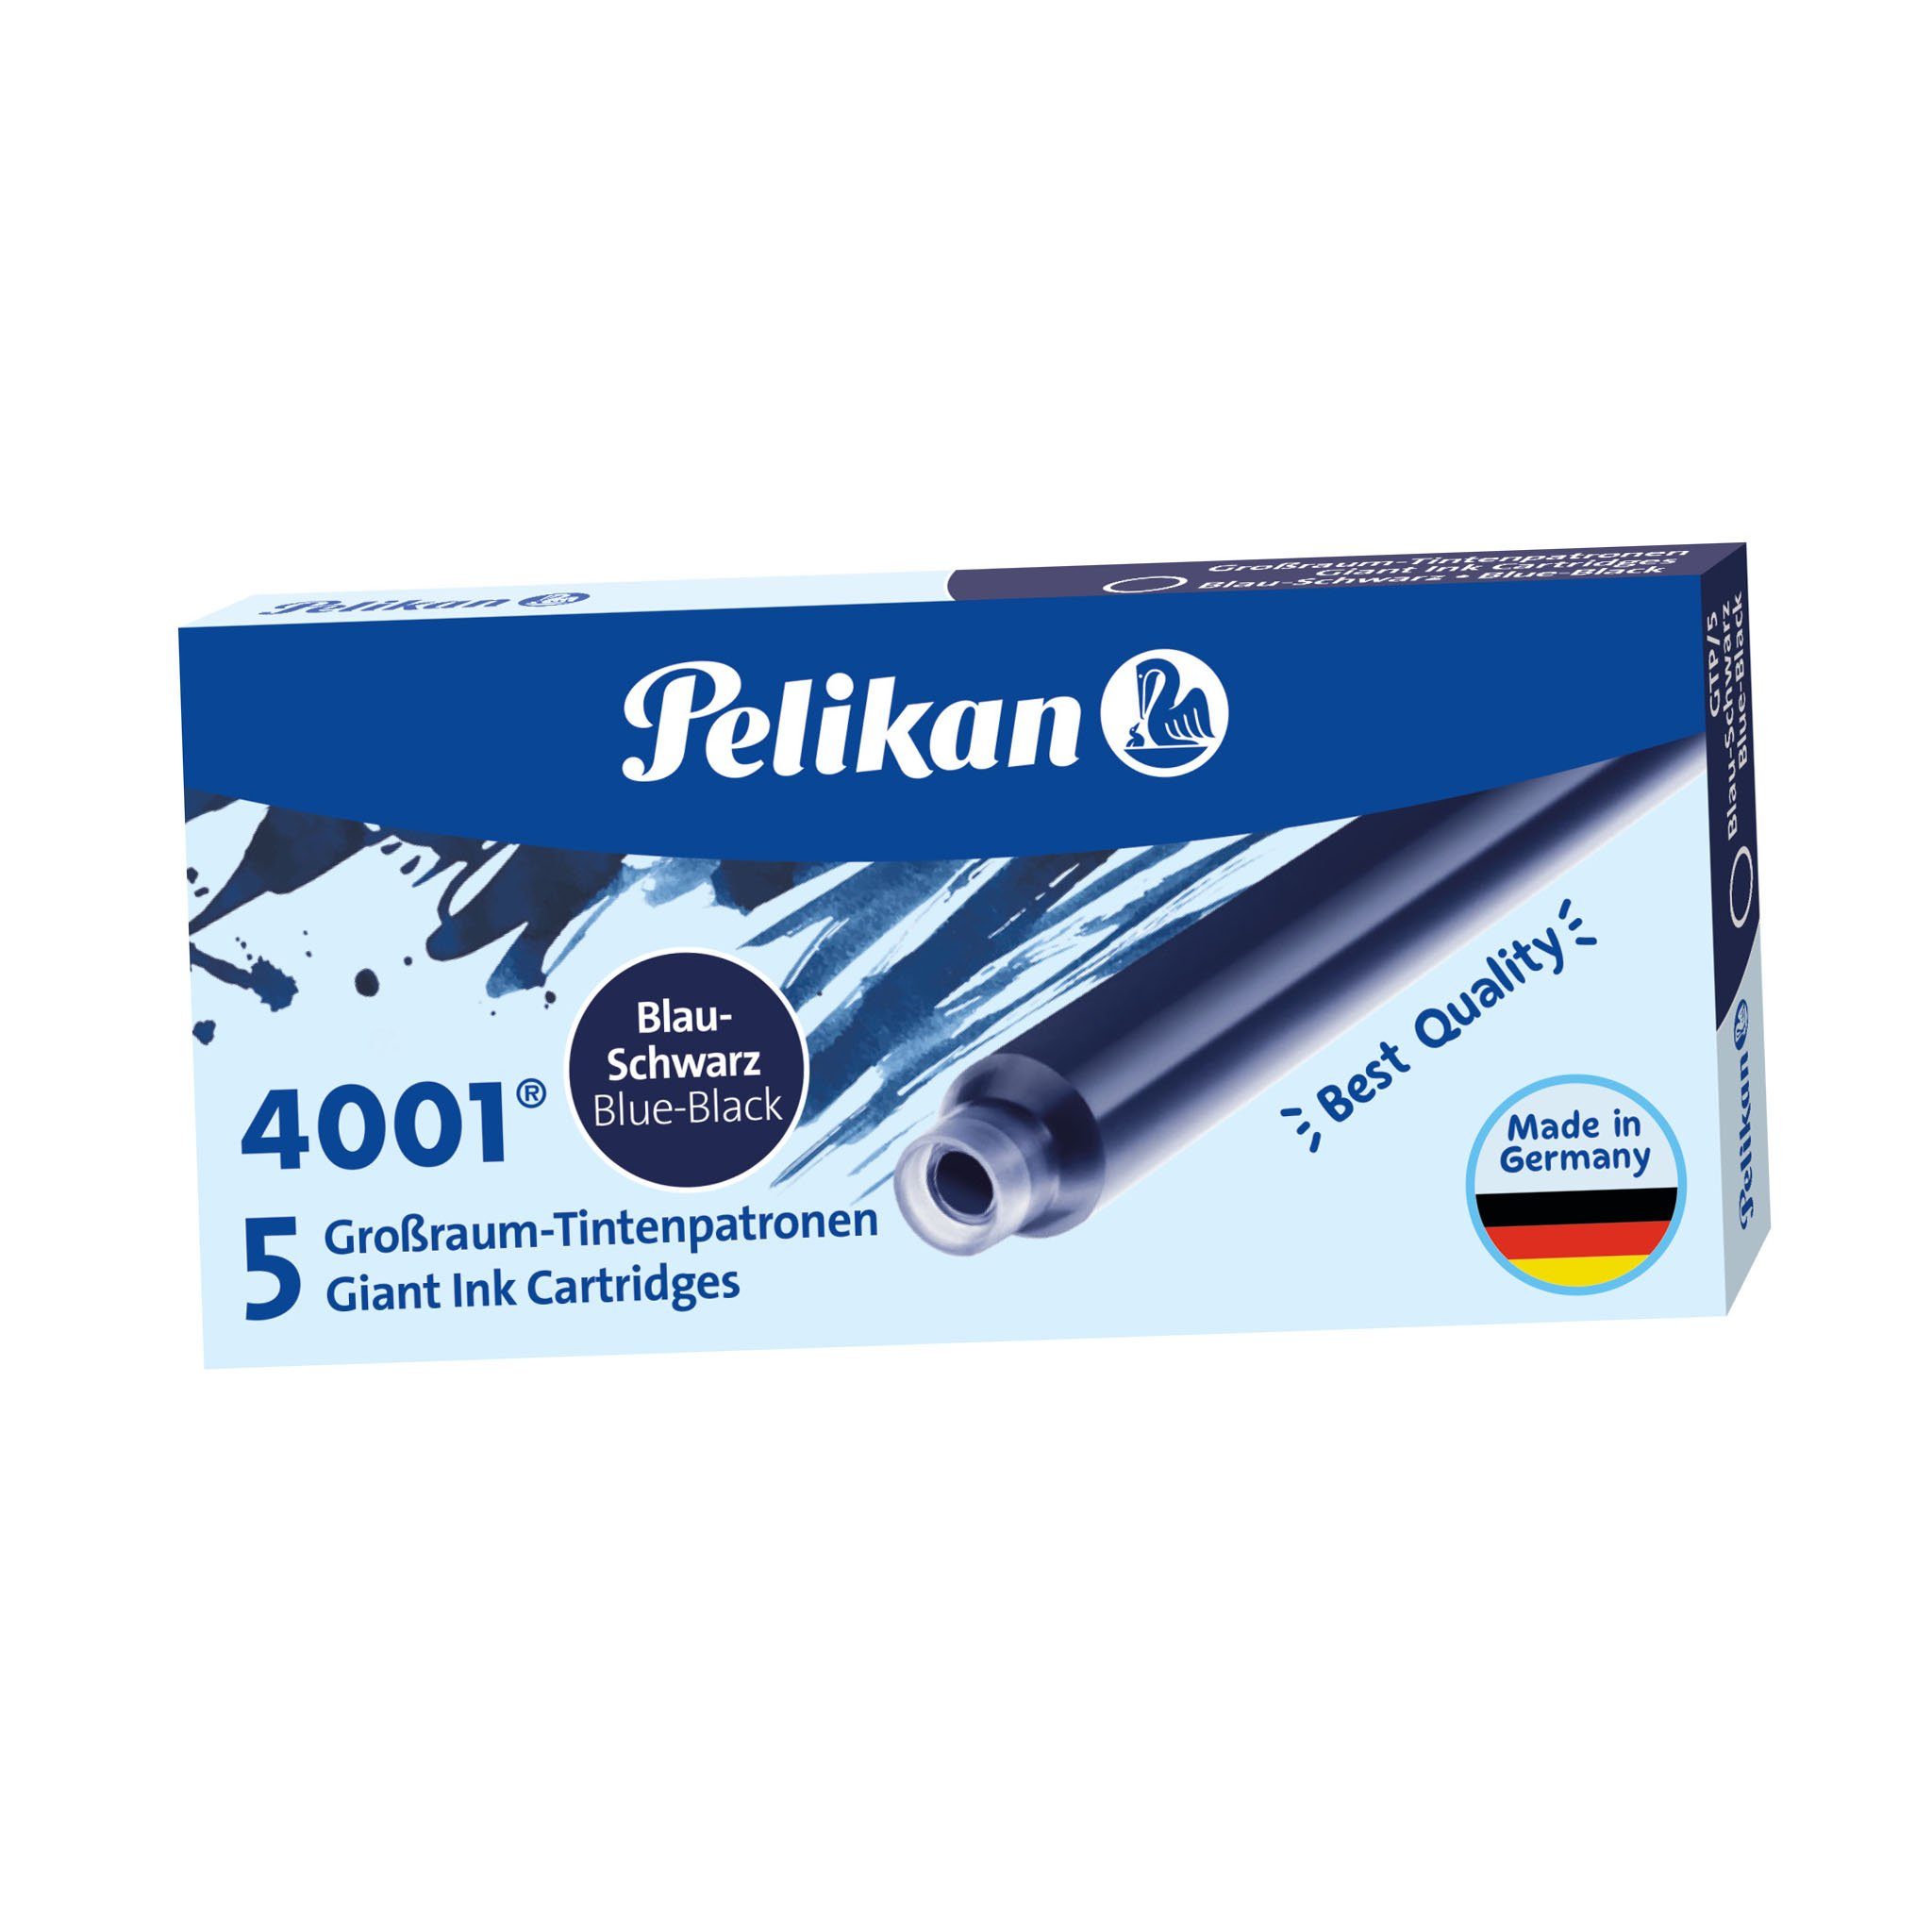 Pelikan Großraum-Tintenpatronen 4001 Pelikan Füllfederhalter GTP/5, blau-schwarz